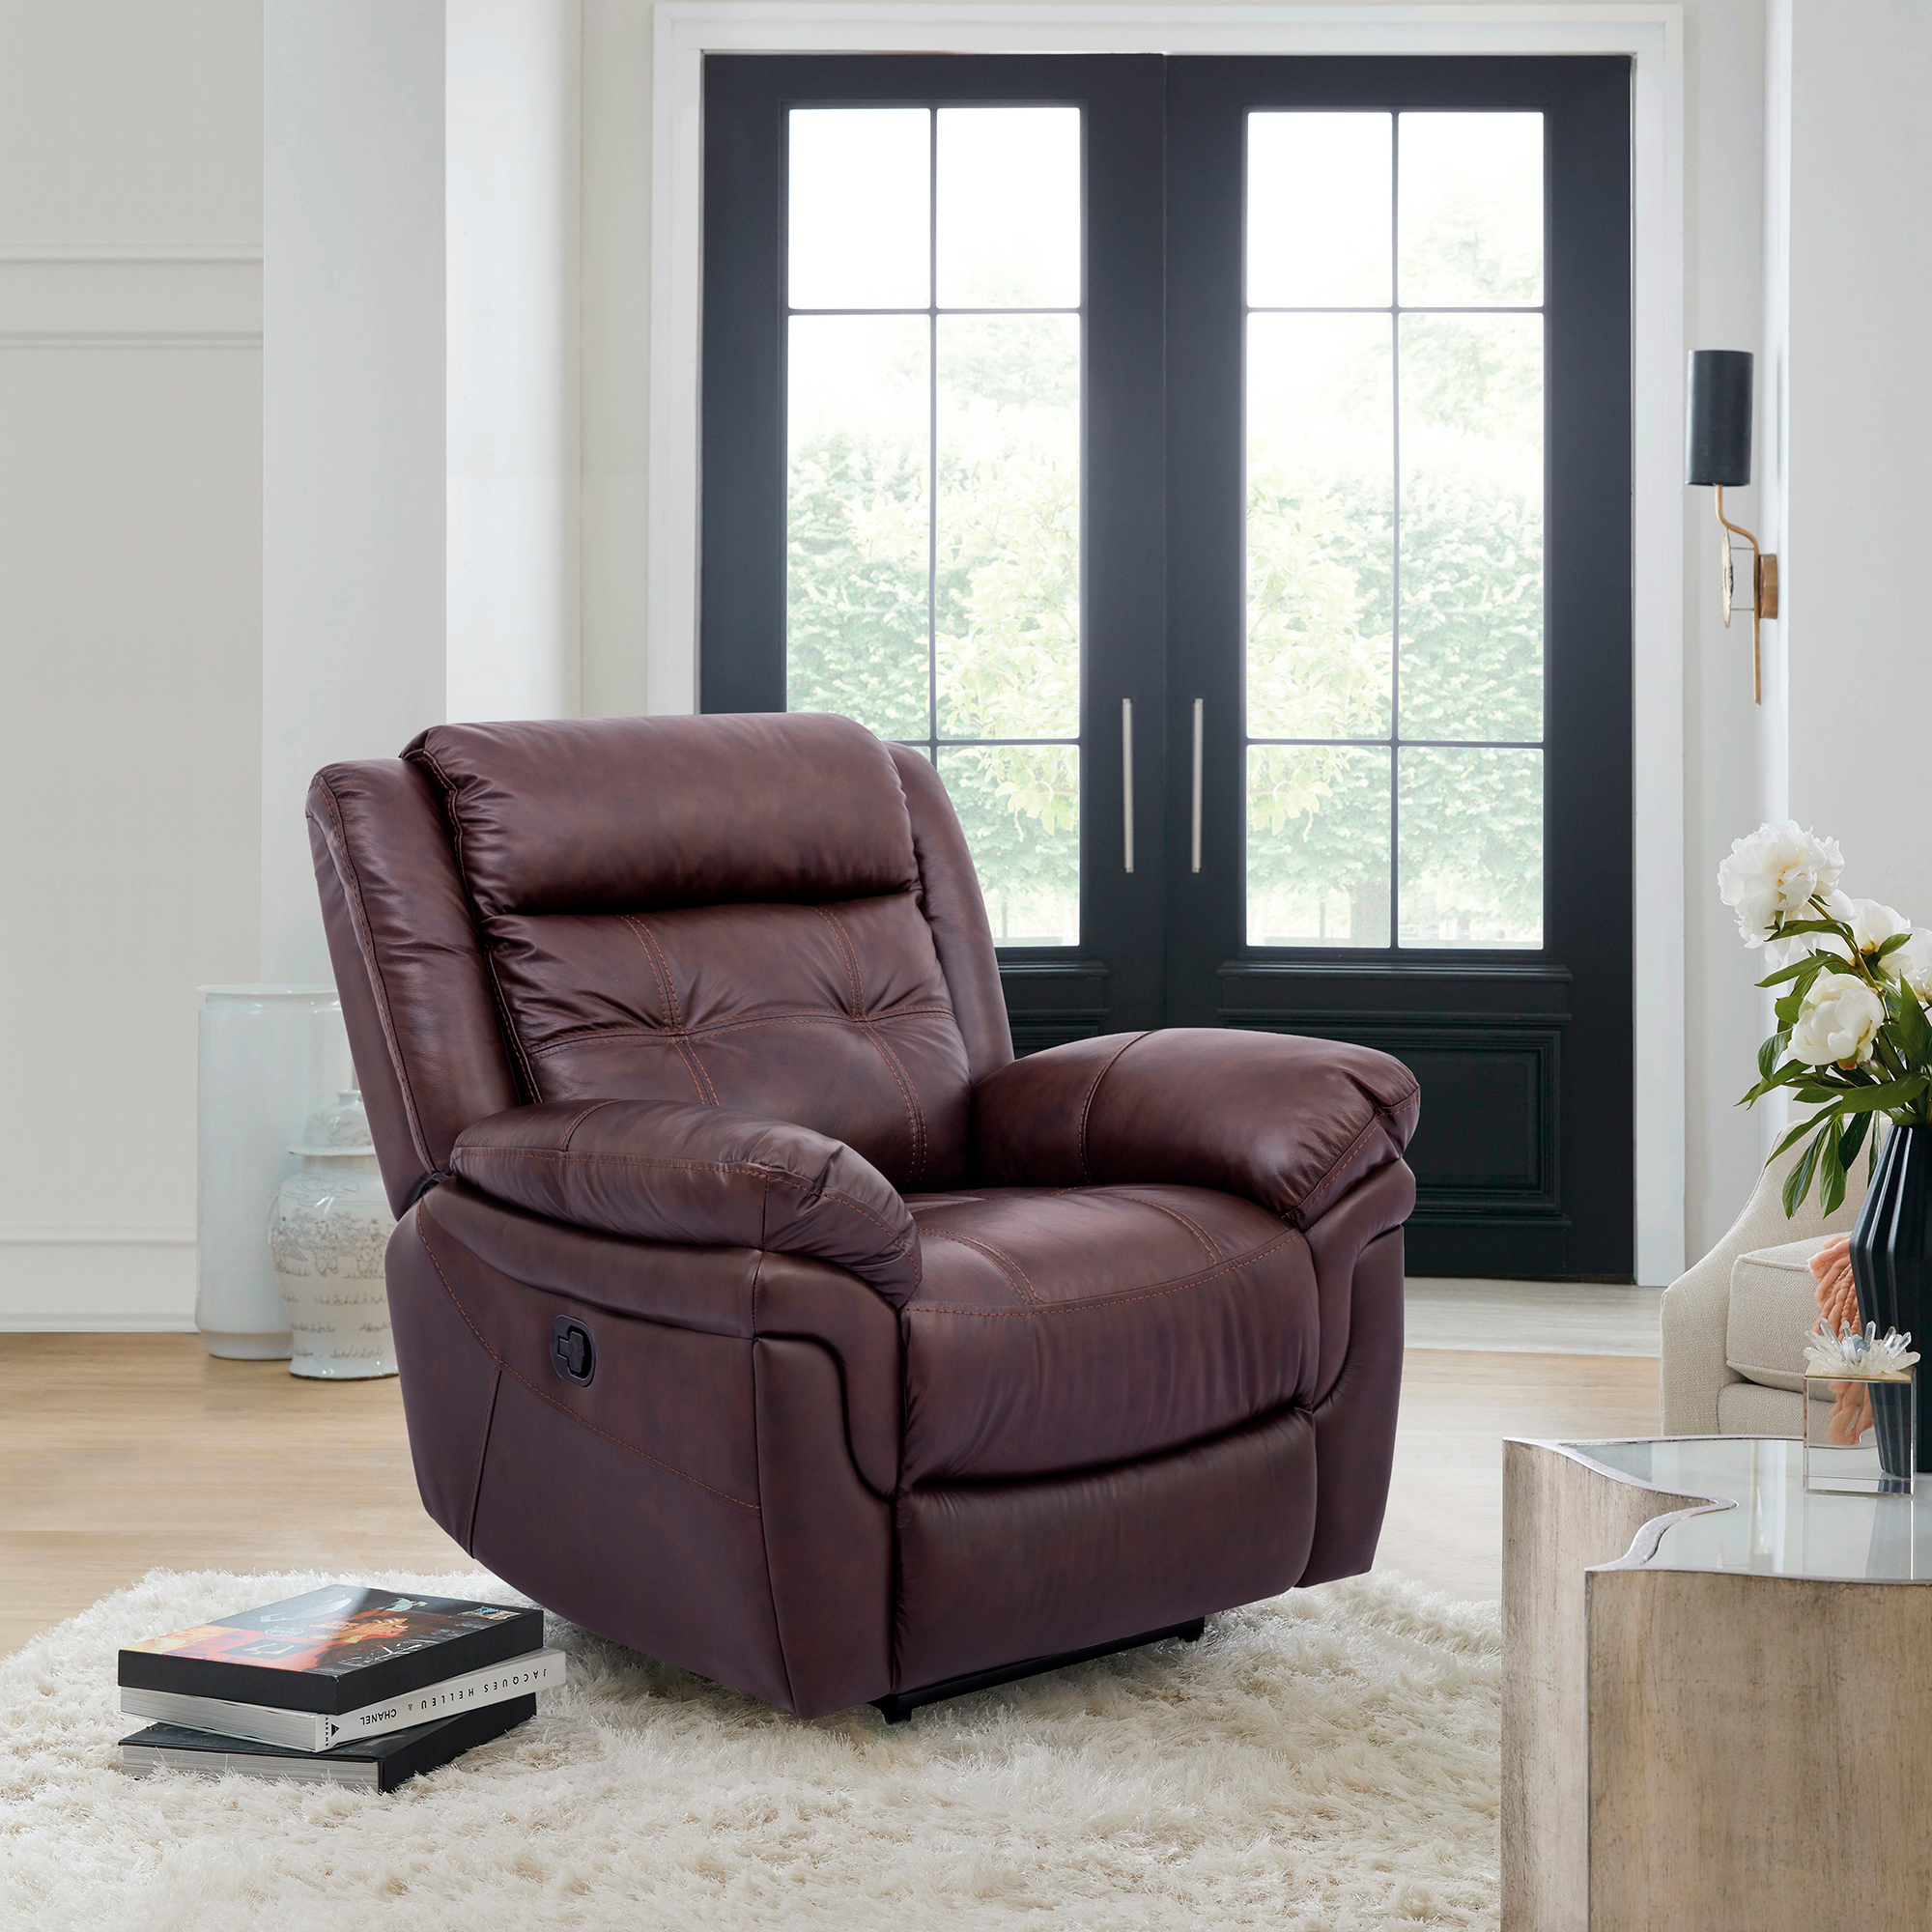 https://www.homethreads.com/files/armen-living/lcmc1br-marcel-manual-recliner-chair-in-dark-brown-leather-ls.jpg